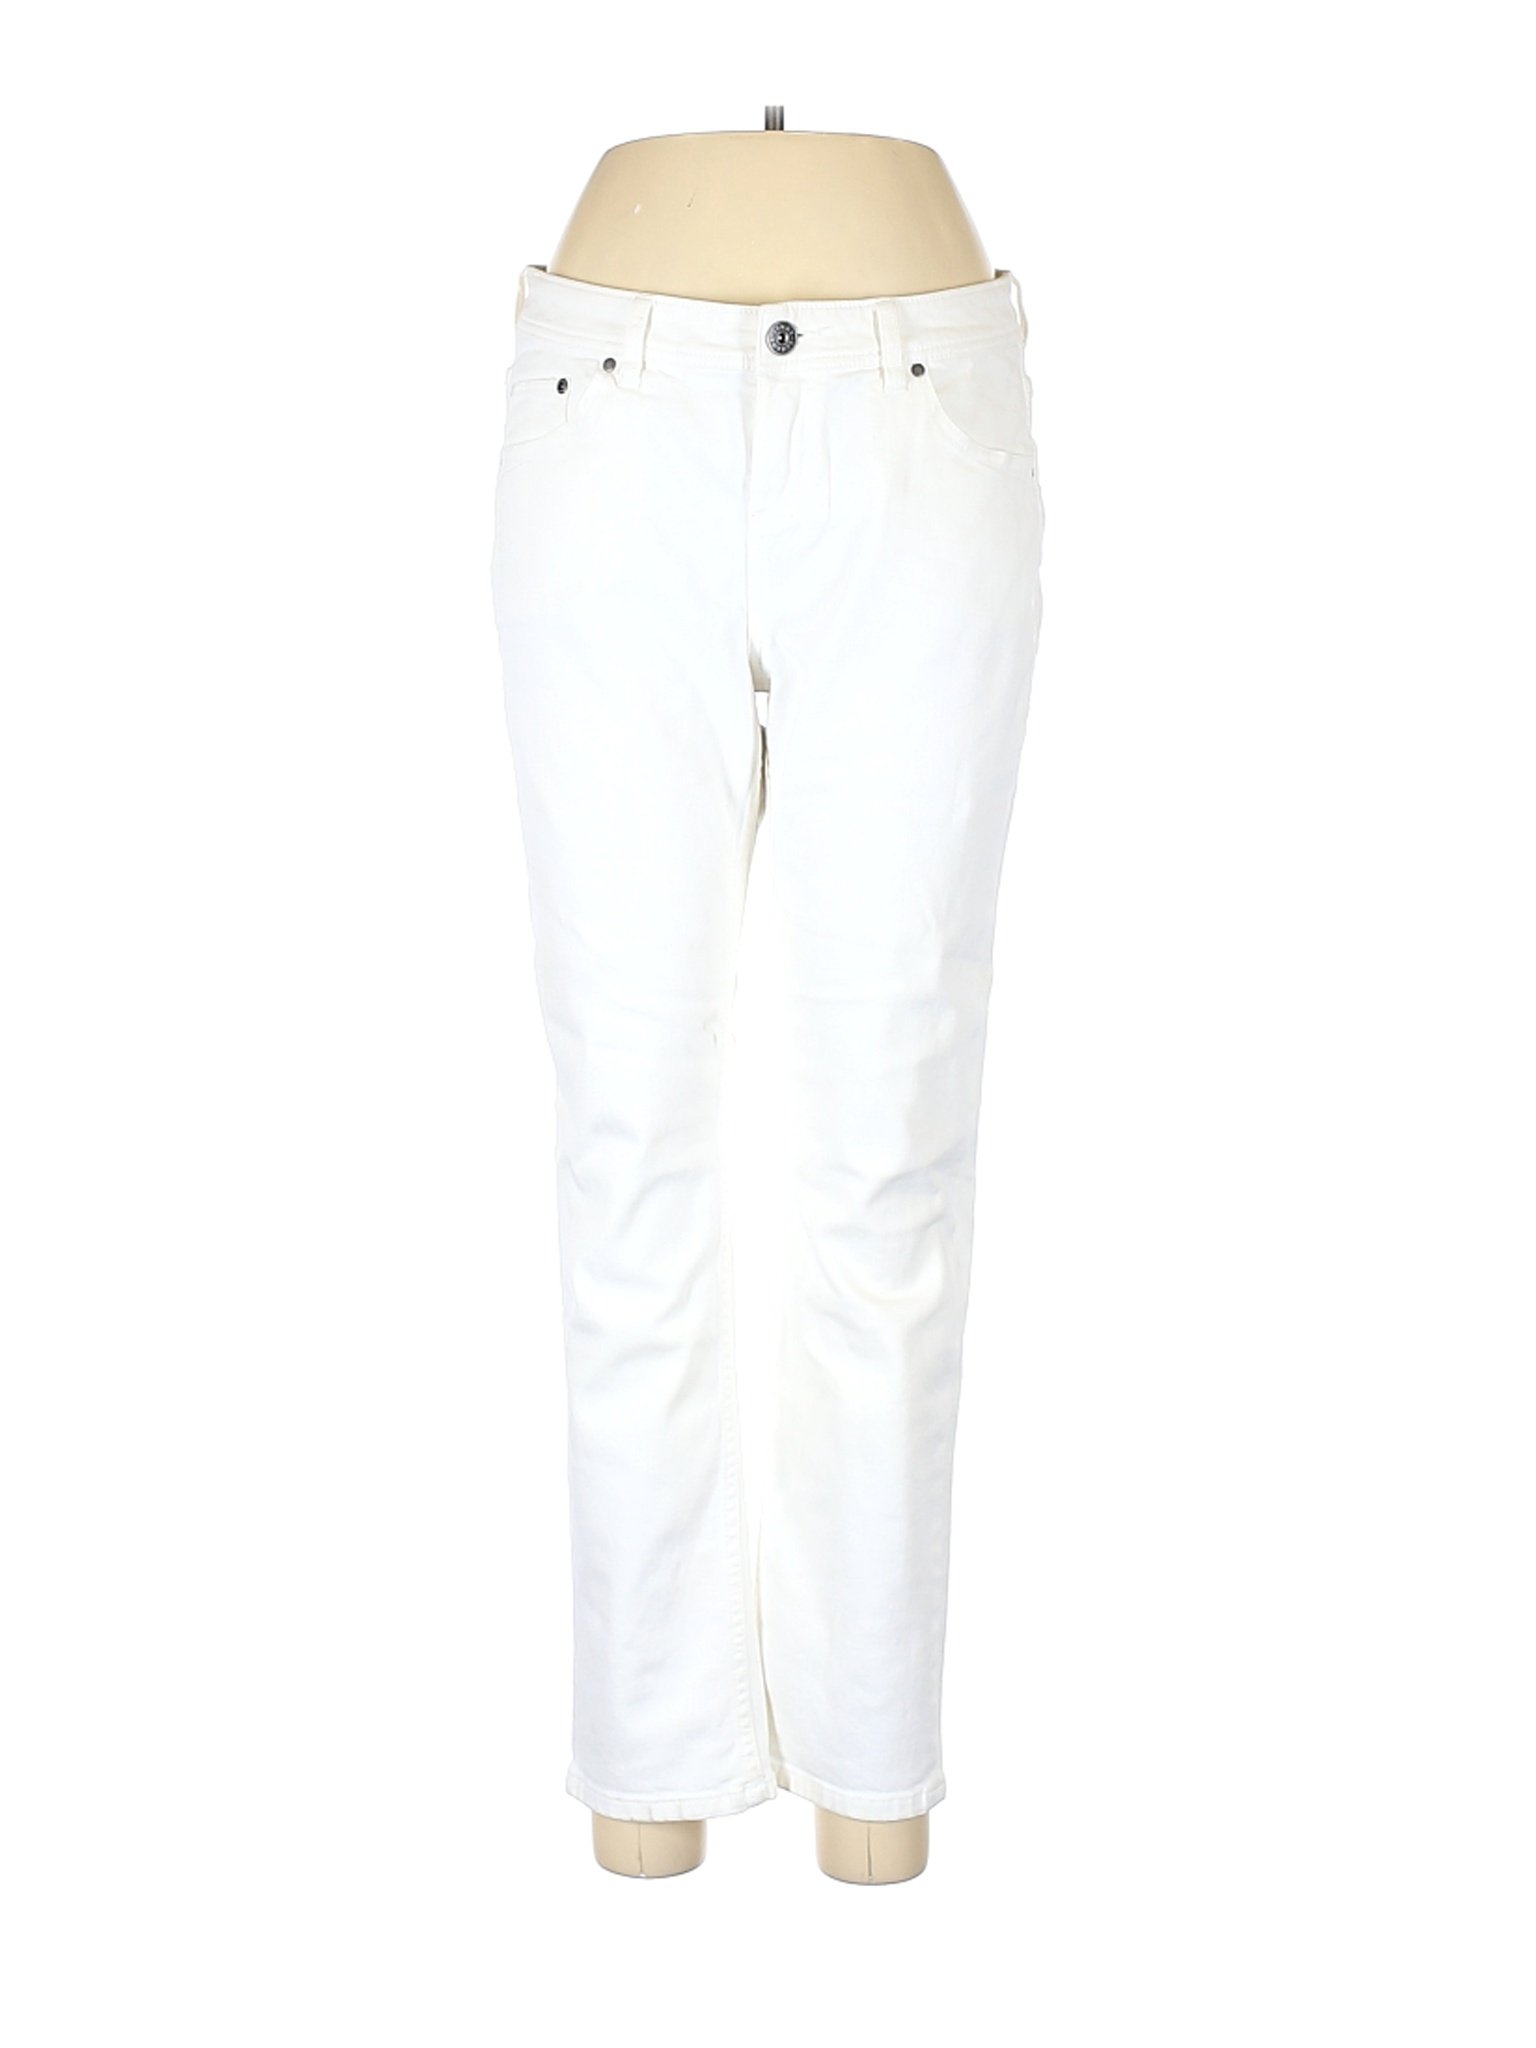 Tommy Bahama Women White Jeans 10 | eBay